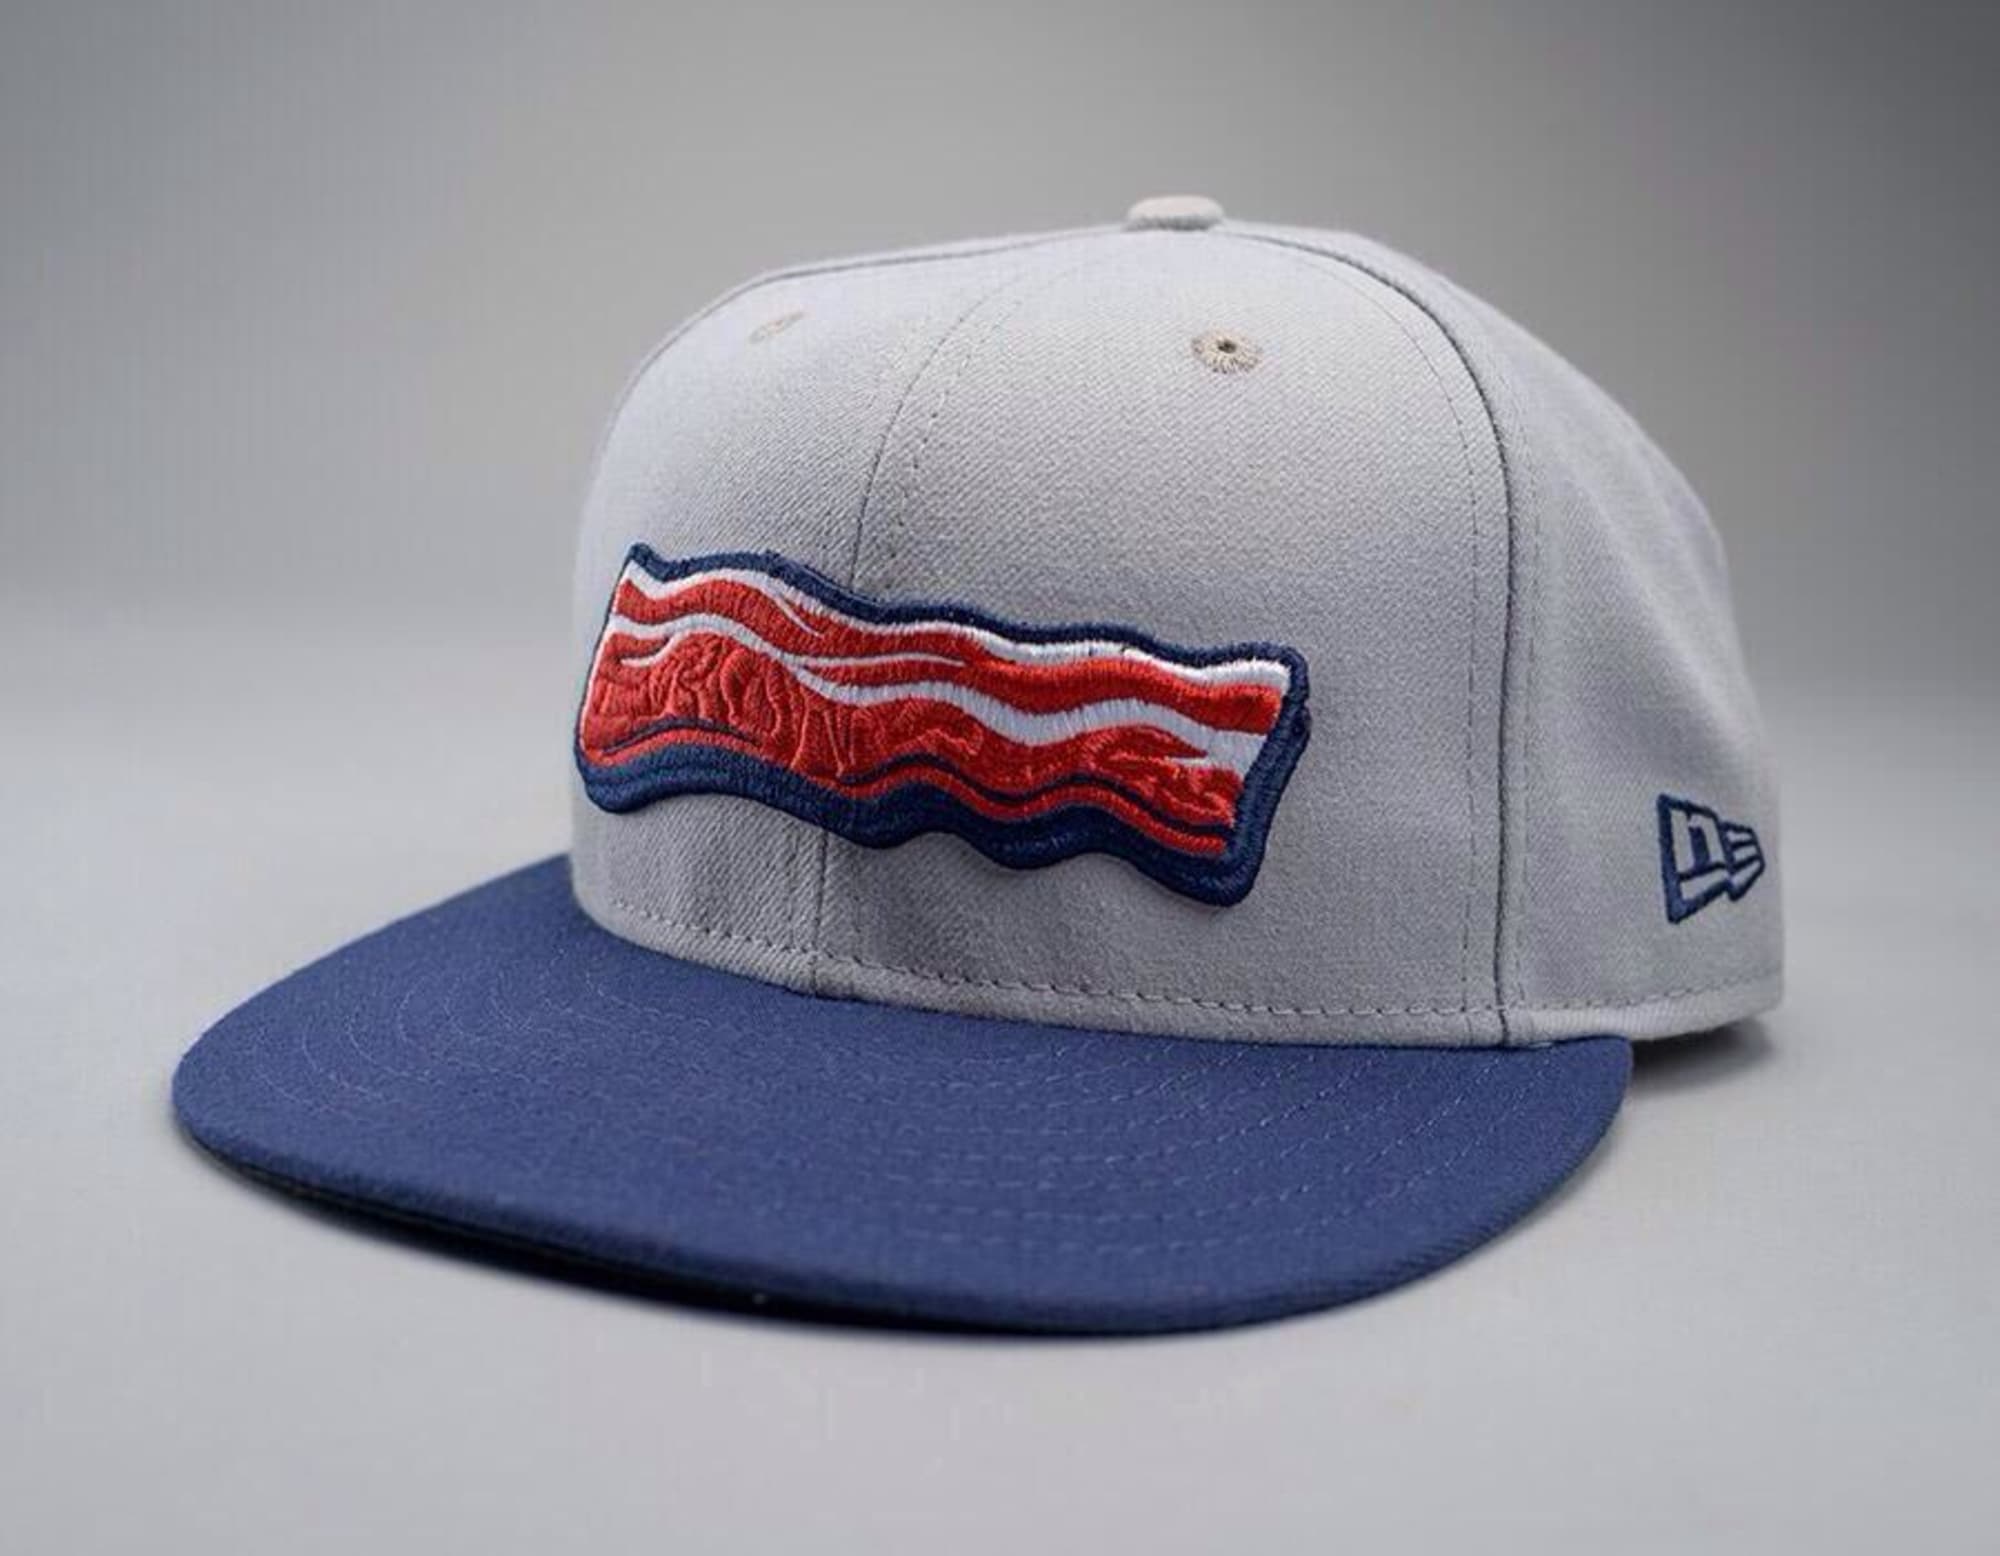 Minor League Baseball&#39;s Lehigh Valley IronPigs logo is piece of bacon (Photo)